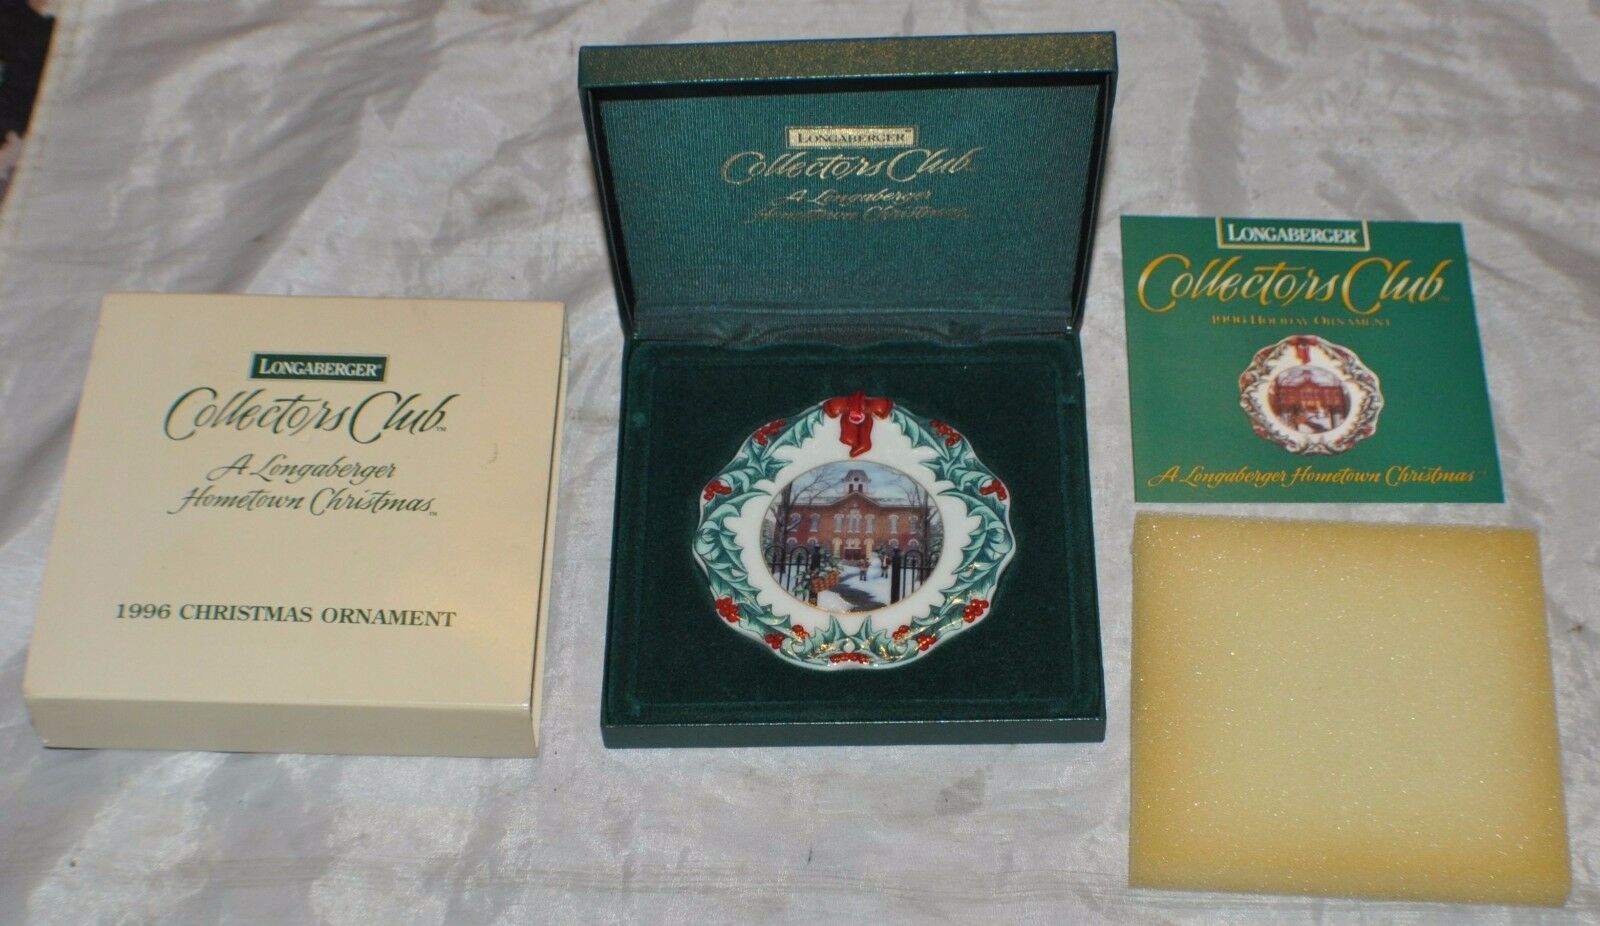 Collectors Club - A Longaberger Hometown Christmas - 1996 Christmas Ornament - $13.09